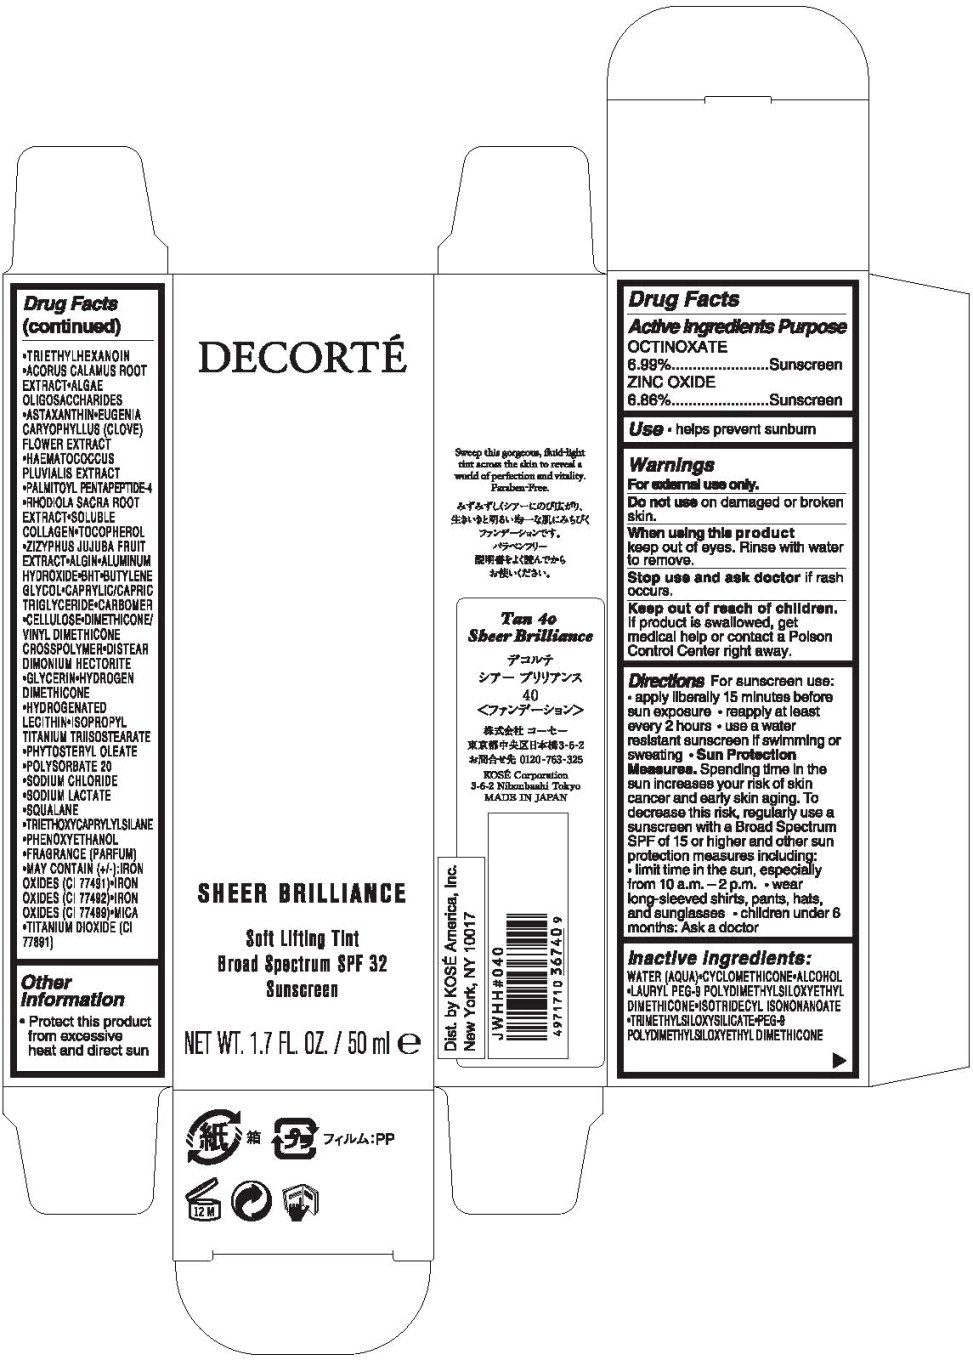 Principal Display Panel - Decorte Sheet Brilliance 40 Level 50 ml Carton Label
